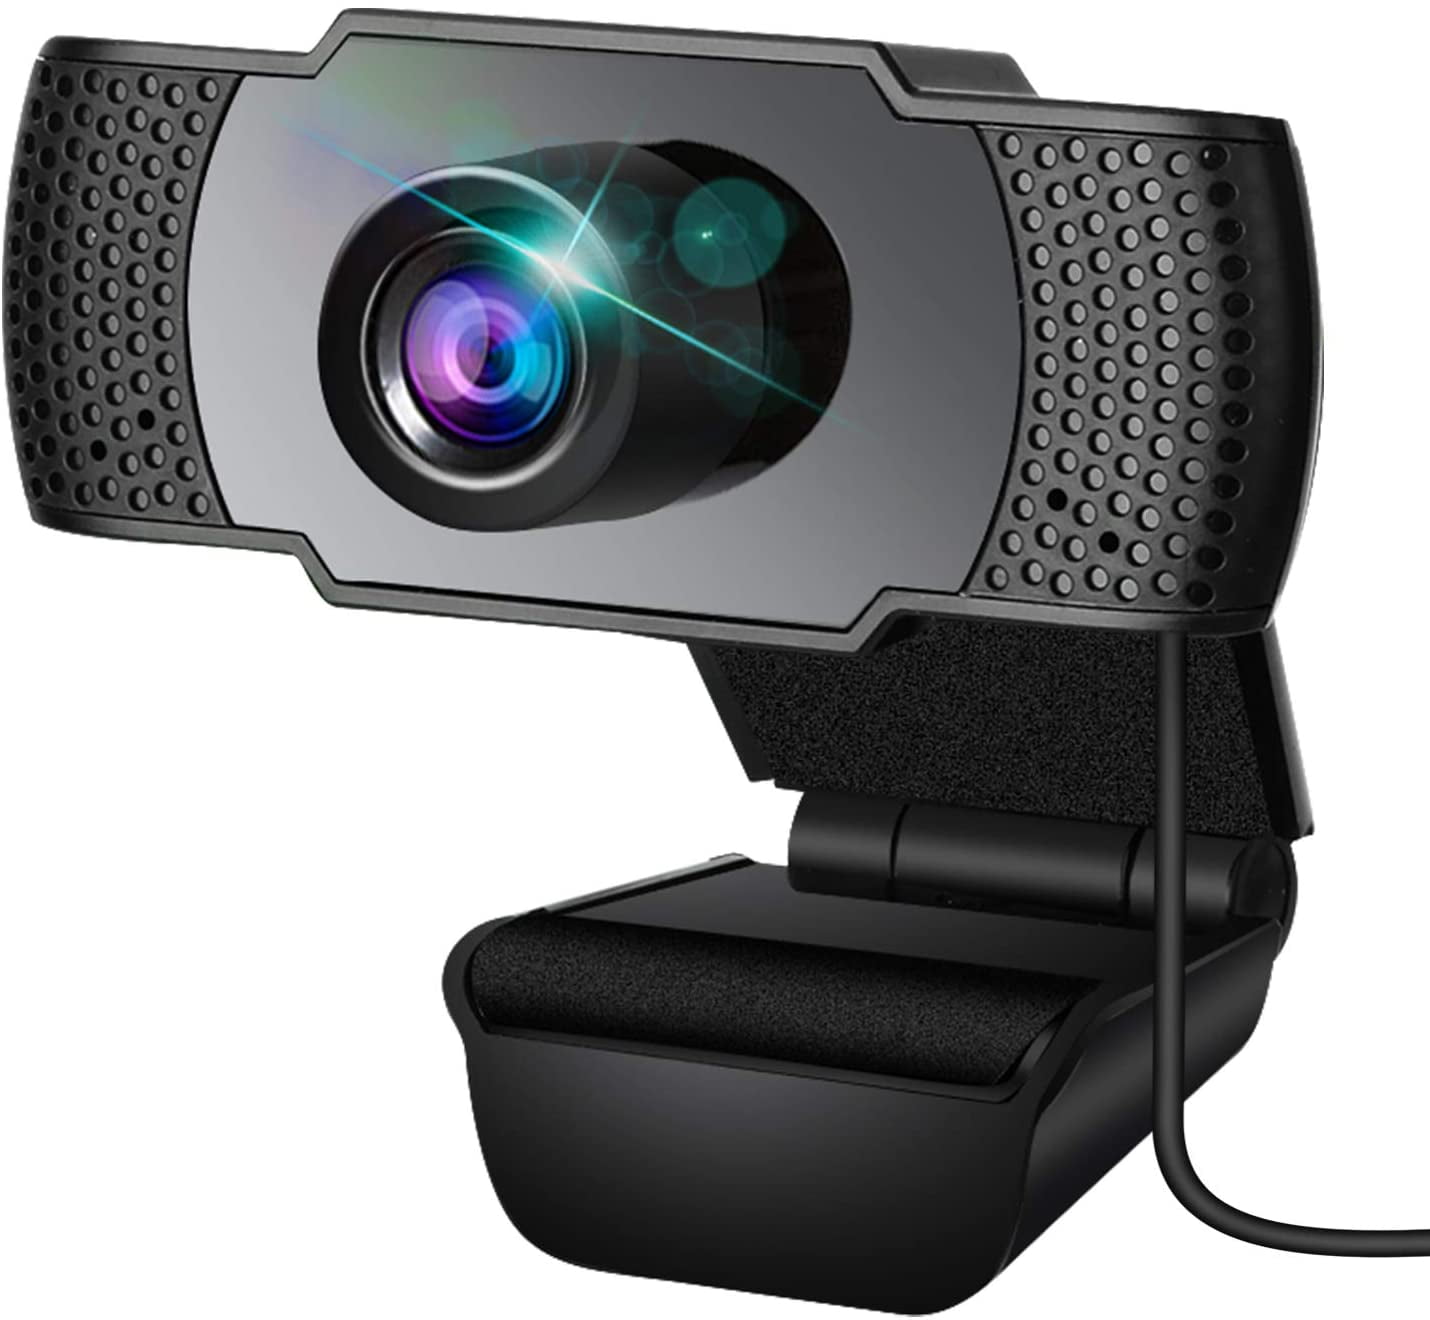 Webcam Auto Focusing Web Camera 1080P HD Cam Microphone for PC Laptop Desktop